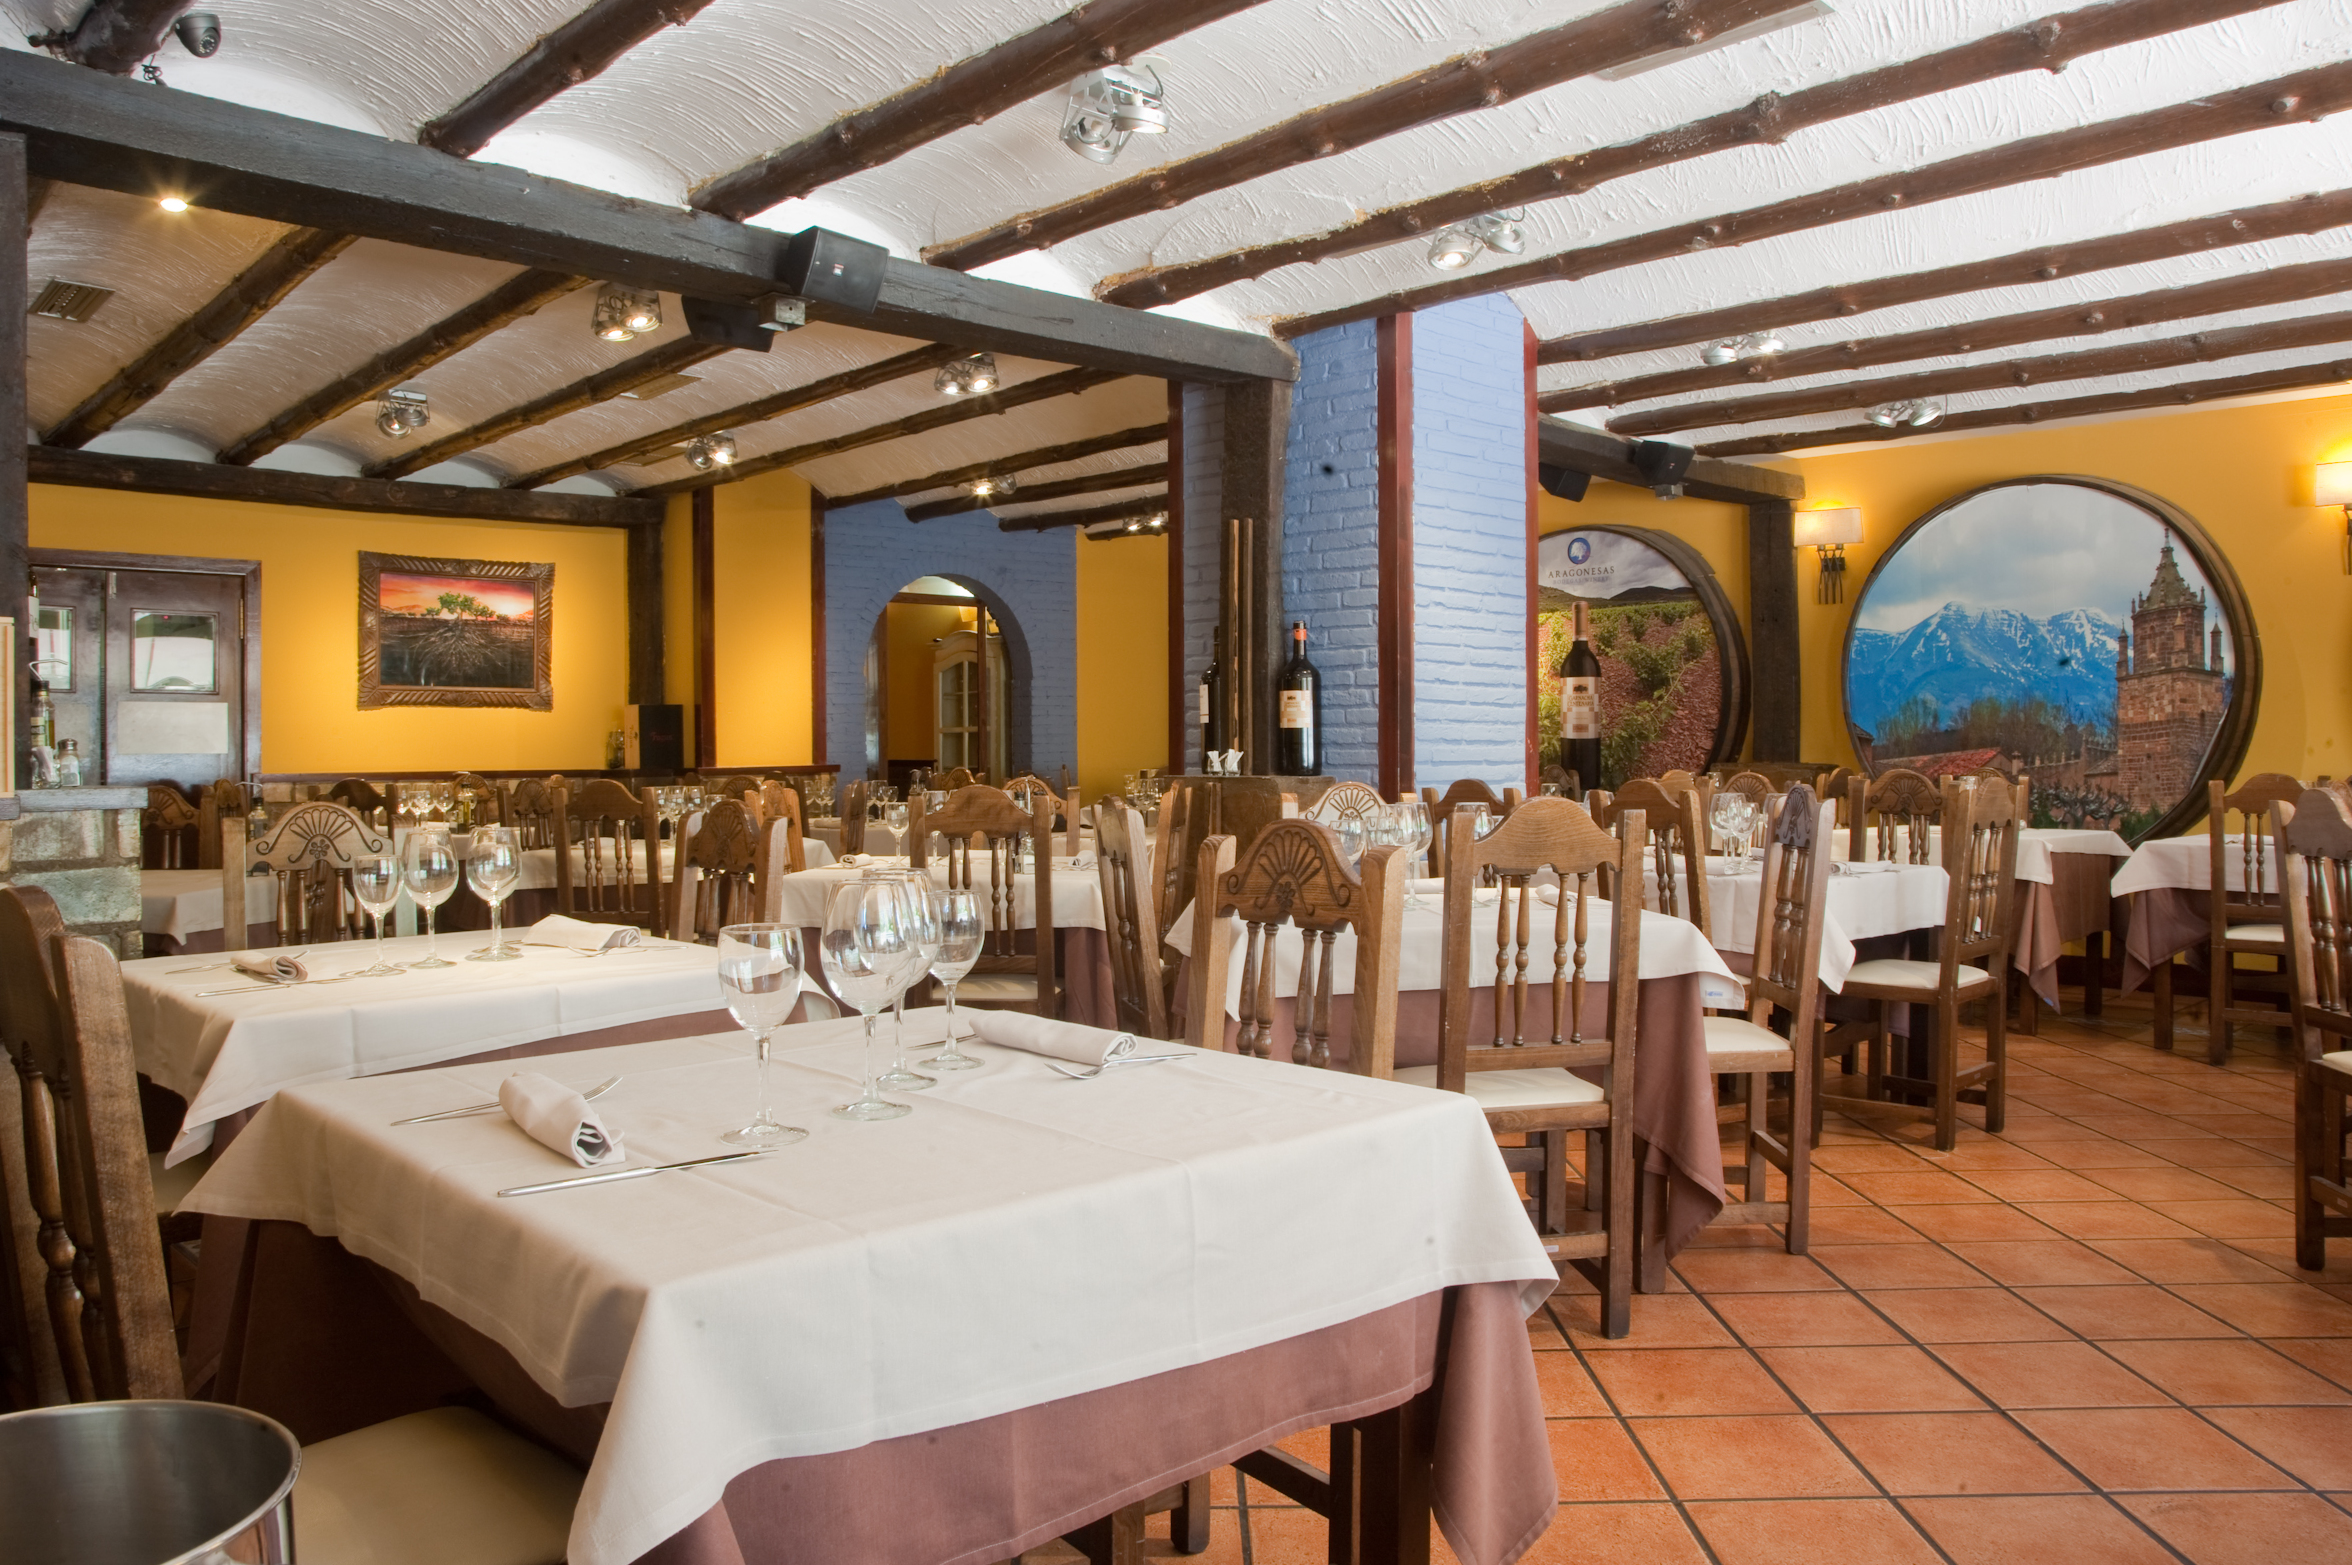 Restaurante en Zaragoza 